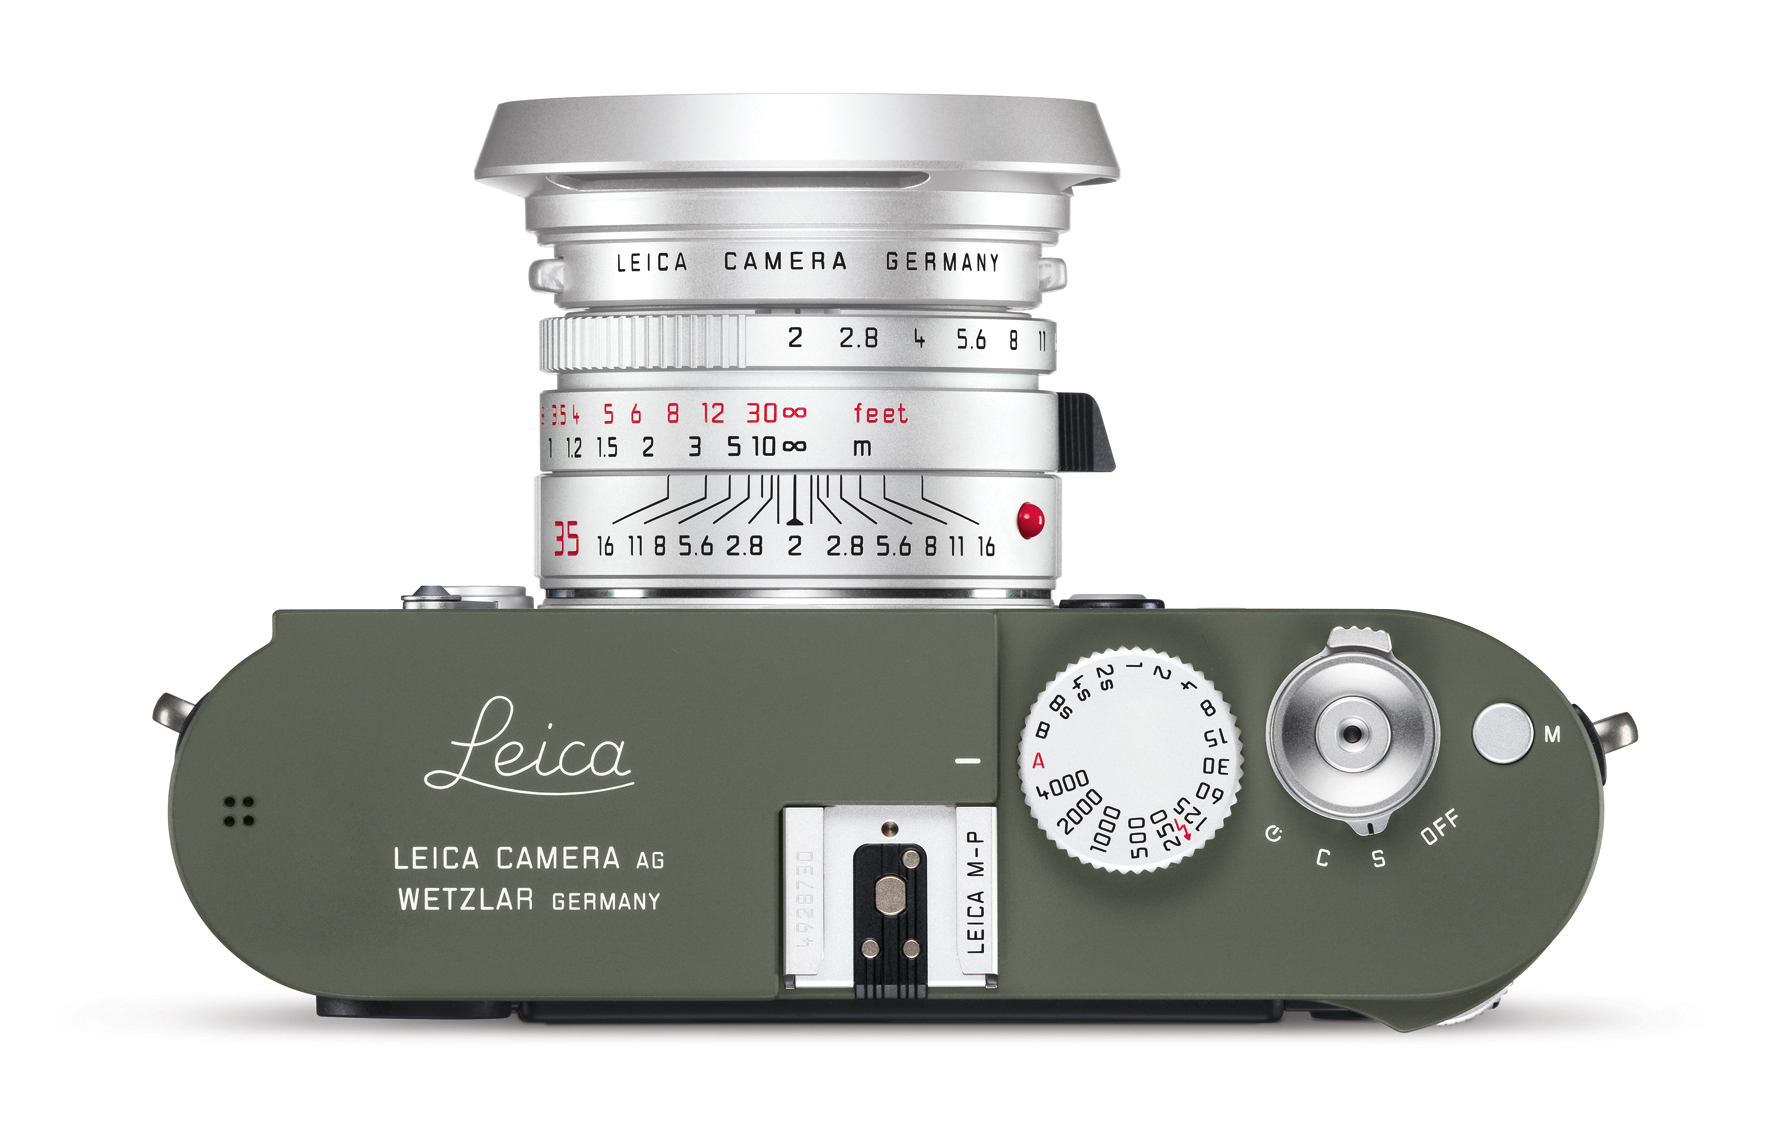 Leica M-P 240 Camera Safari Edition Review by Master Photographer Oz Yilmaz. Leica review examines the Leica M-P 240 Camera Safari Edition for best results.